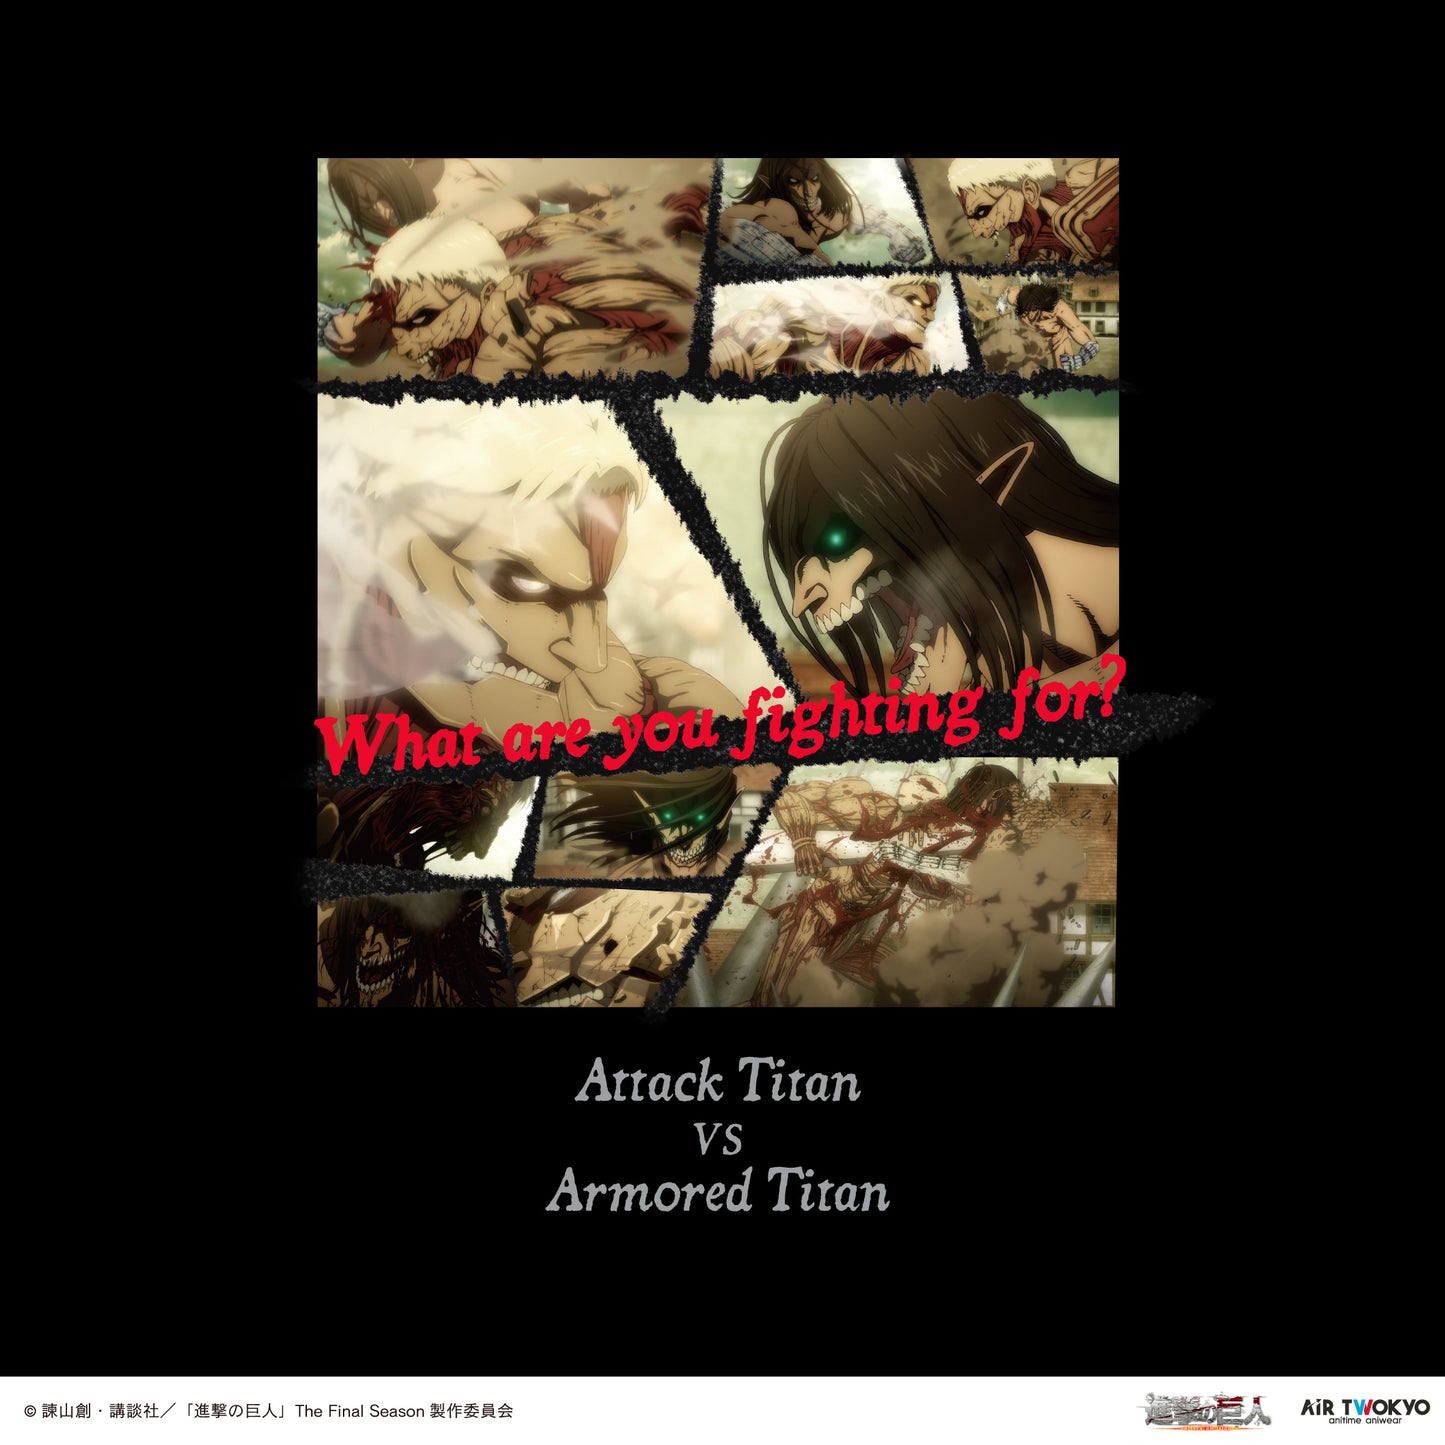  “Attack on Titan” The Final Season Part 2 scene shot T-shirt (Eren titan vs Armored titan)